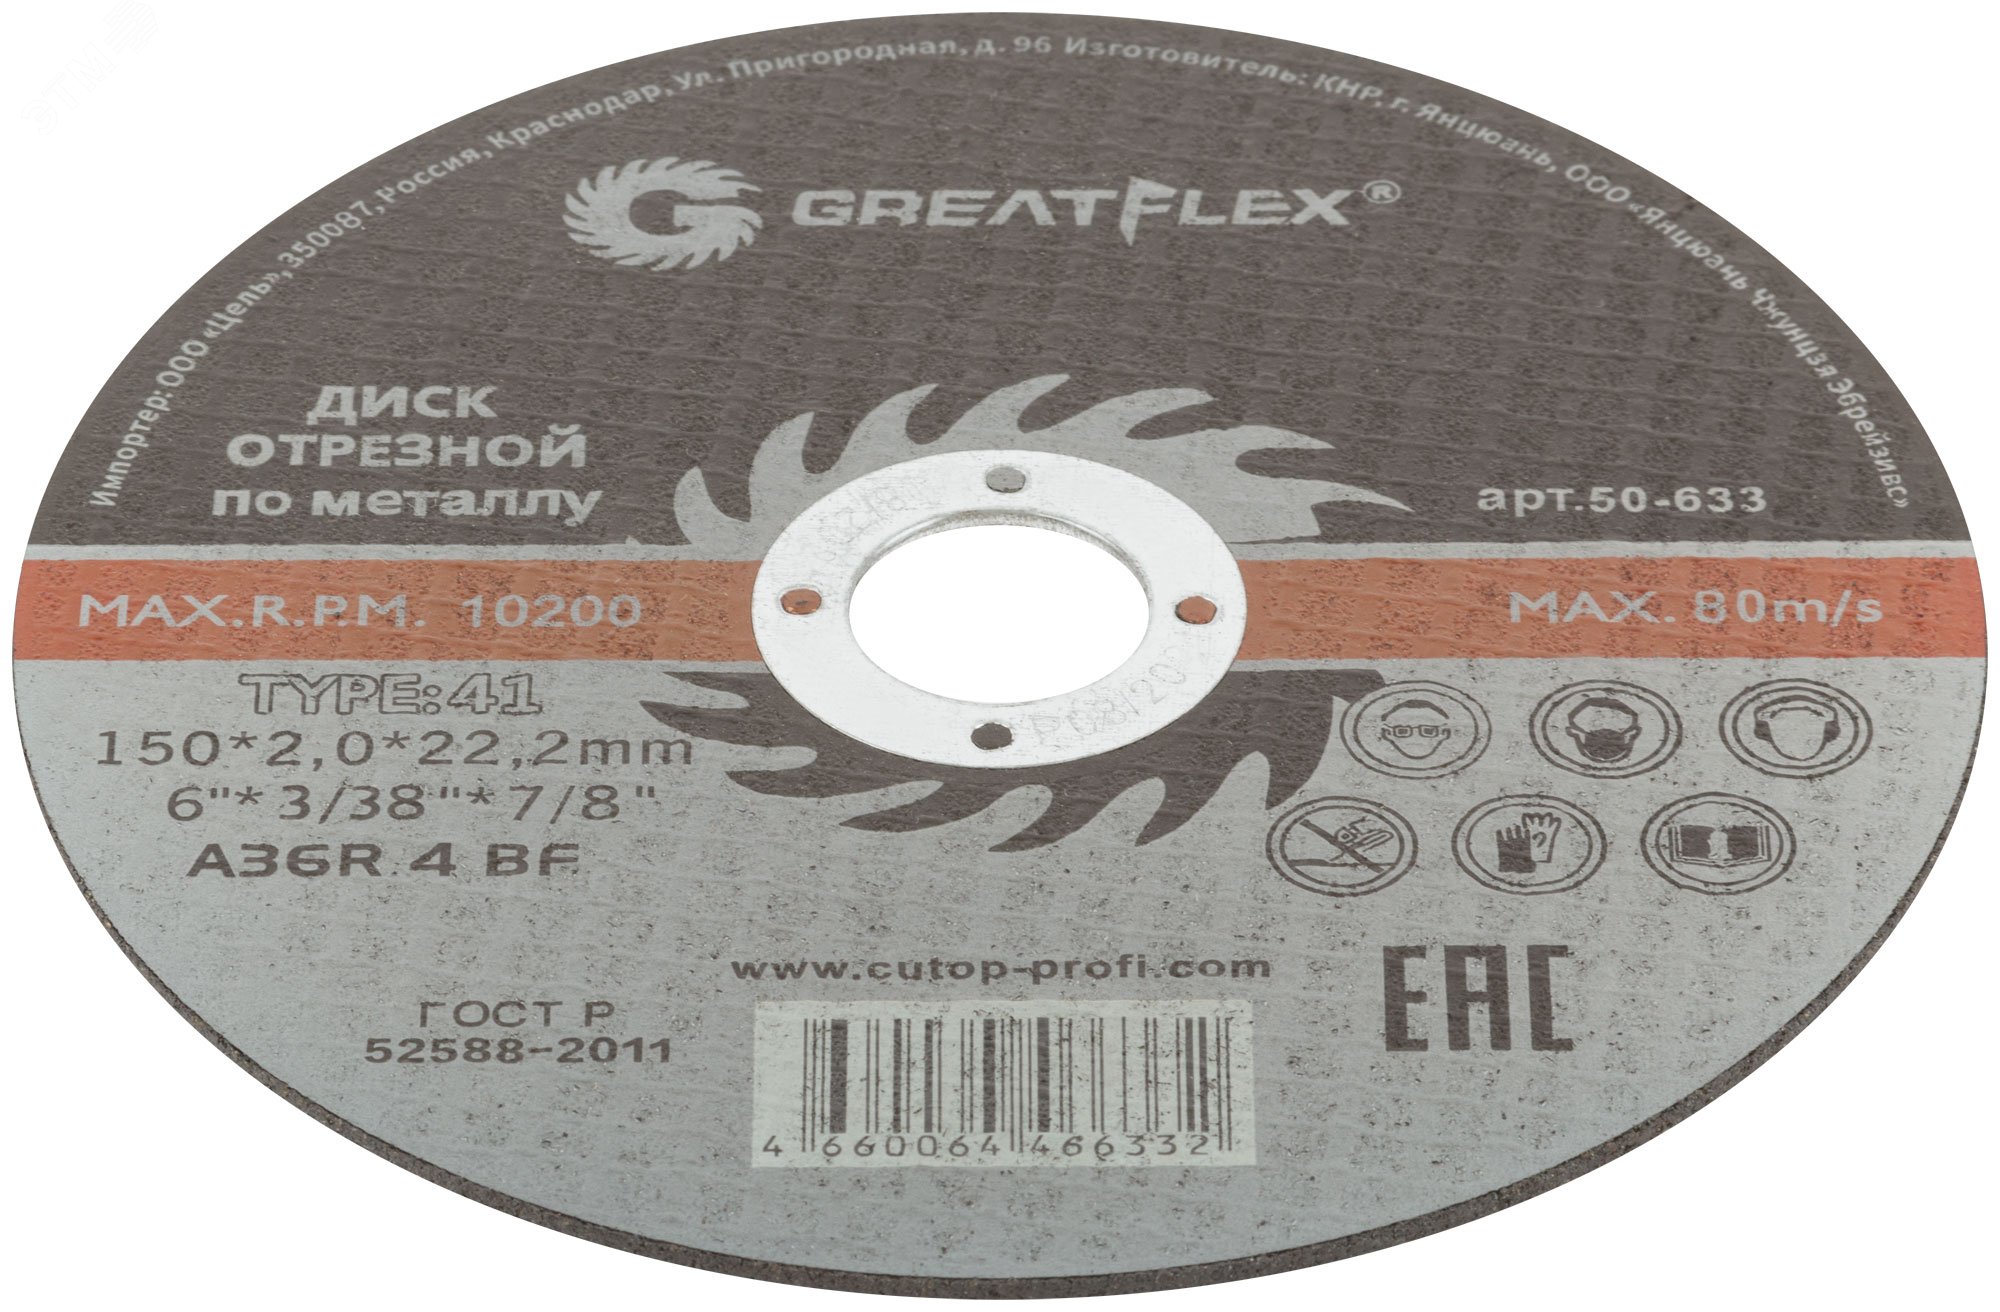 Диск отрезной по металлу T41-150 х 2.0 х 22.2 мм, класс Master 50-633 Greatflex - превью 3